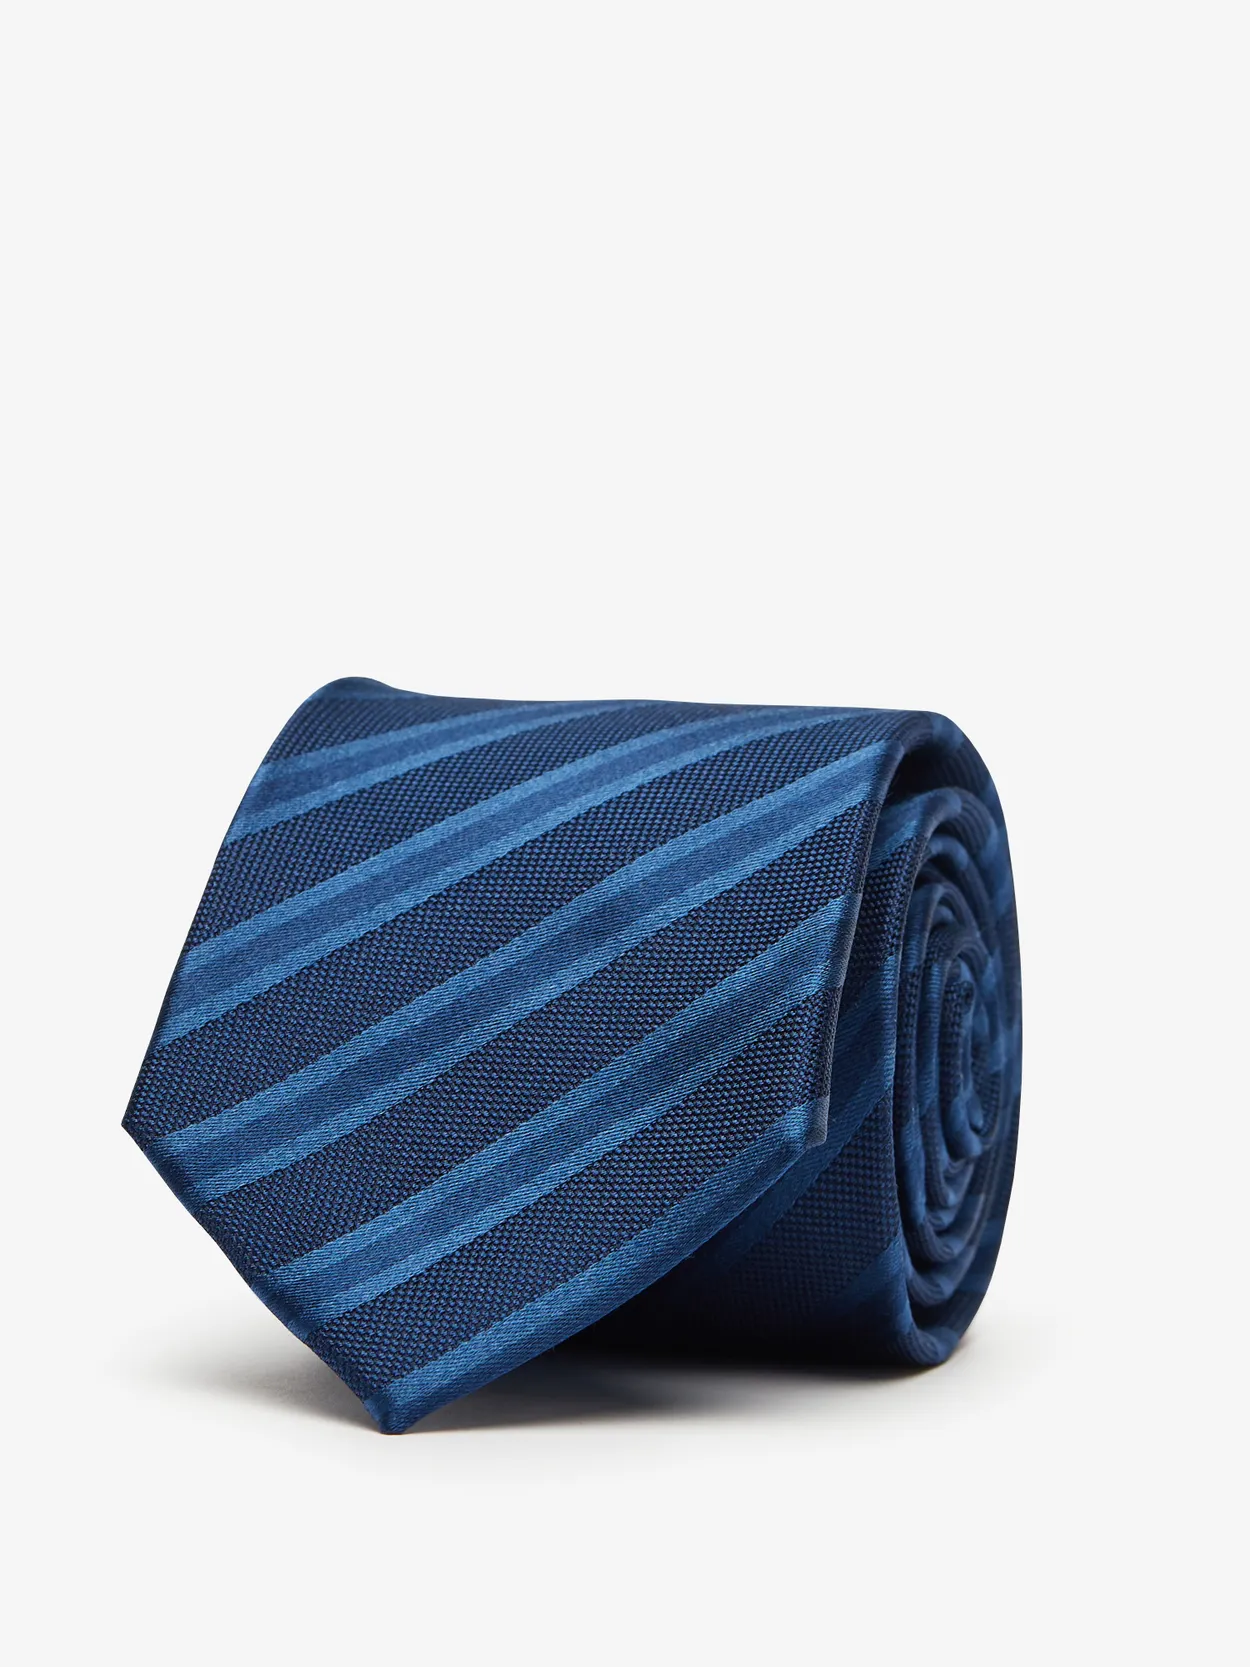 Blue Tie Striped 